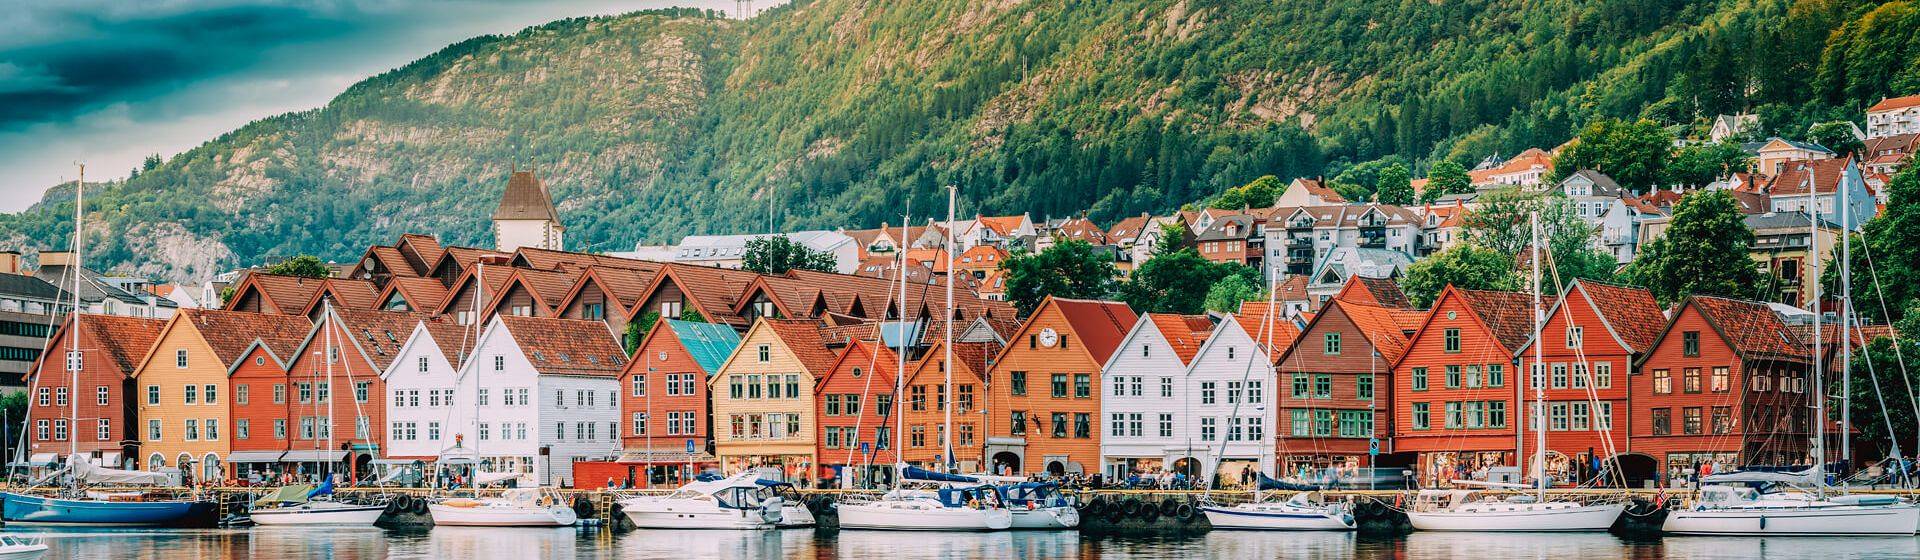 Holidays to Bergen Image